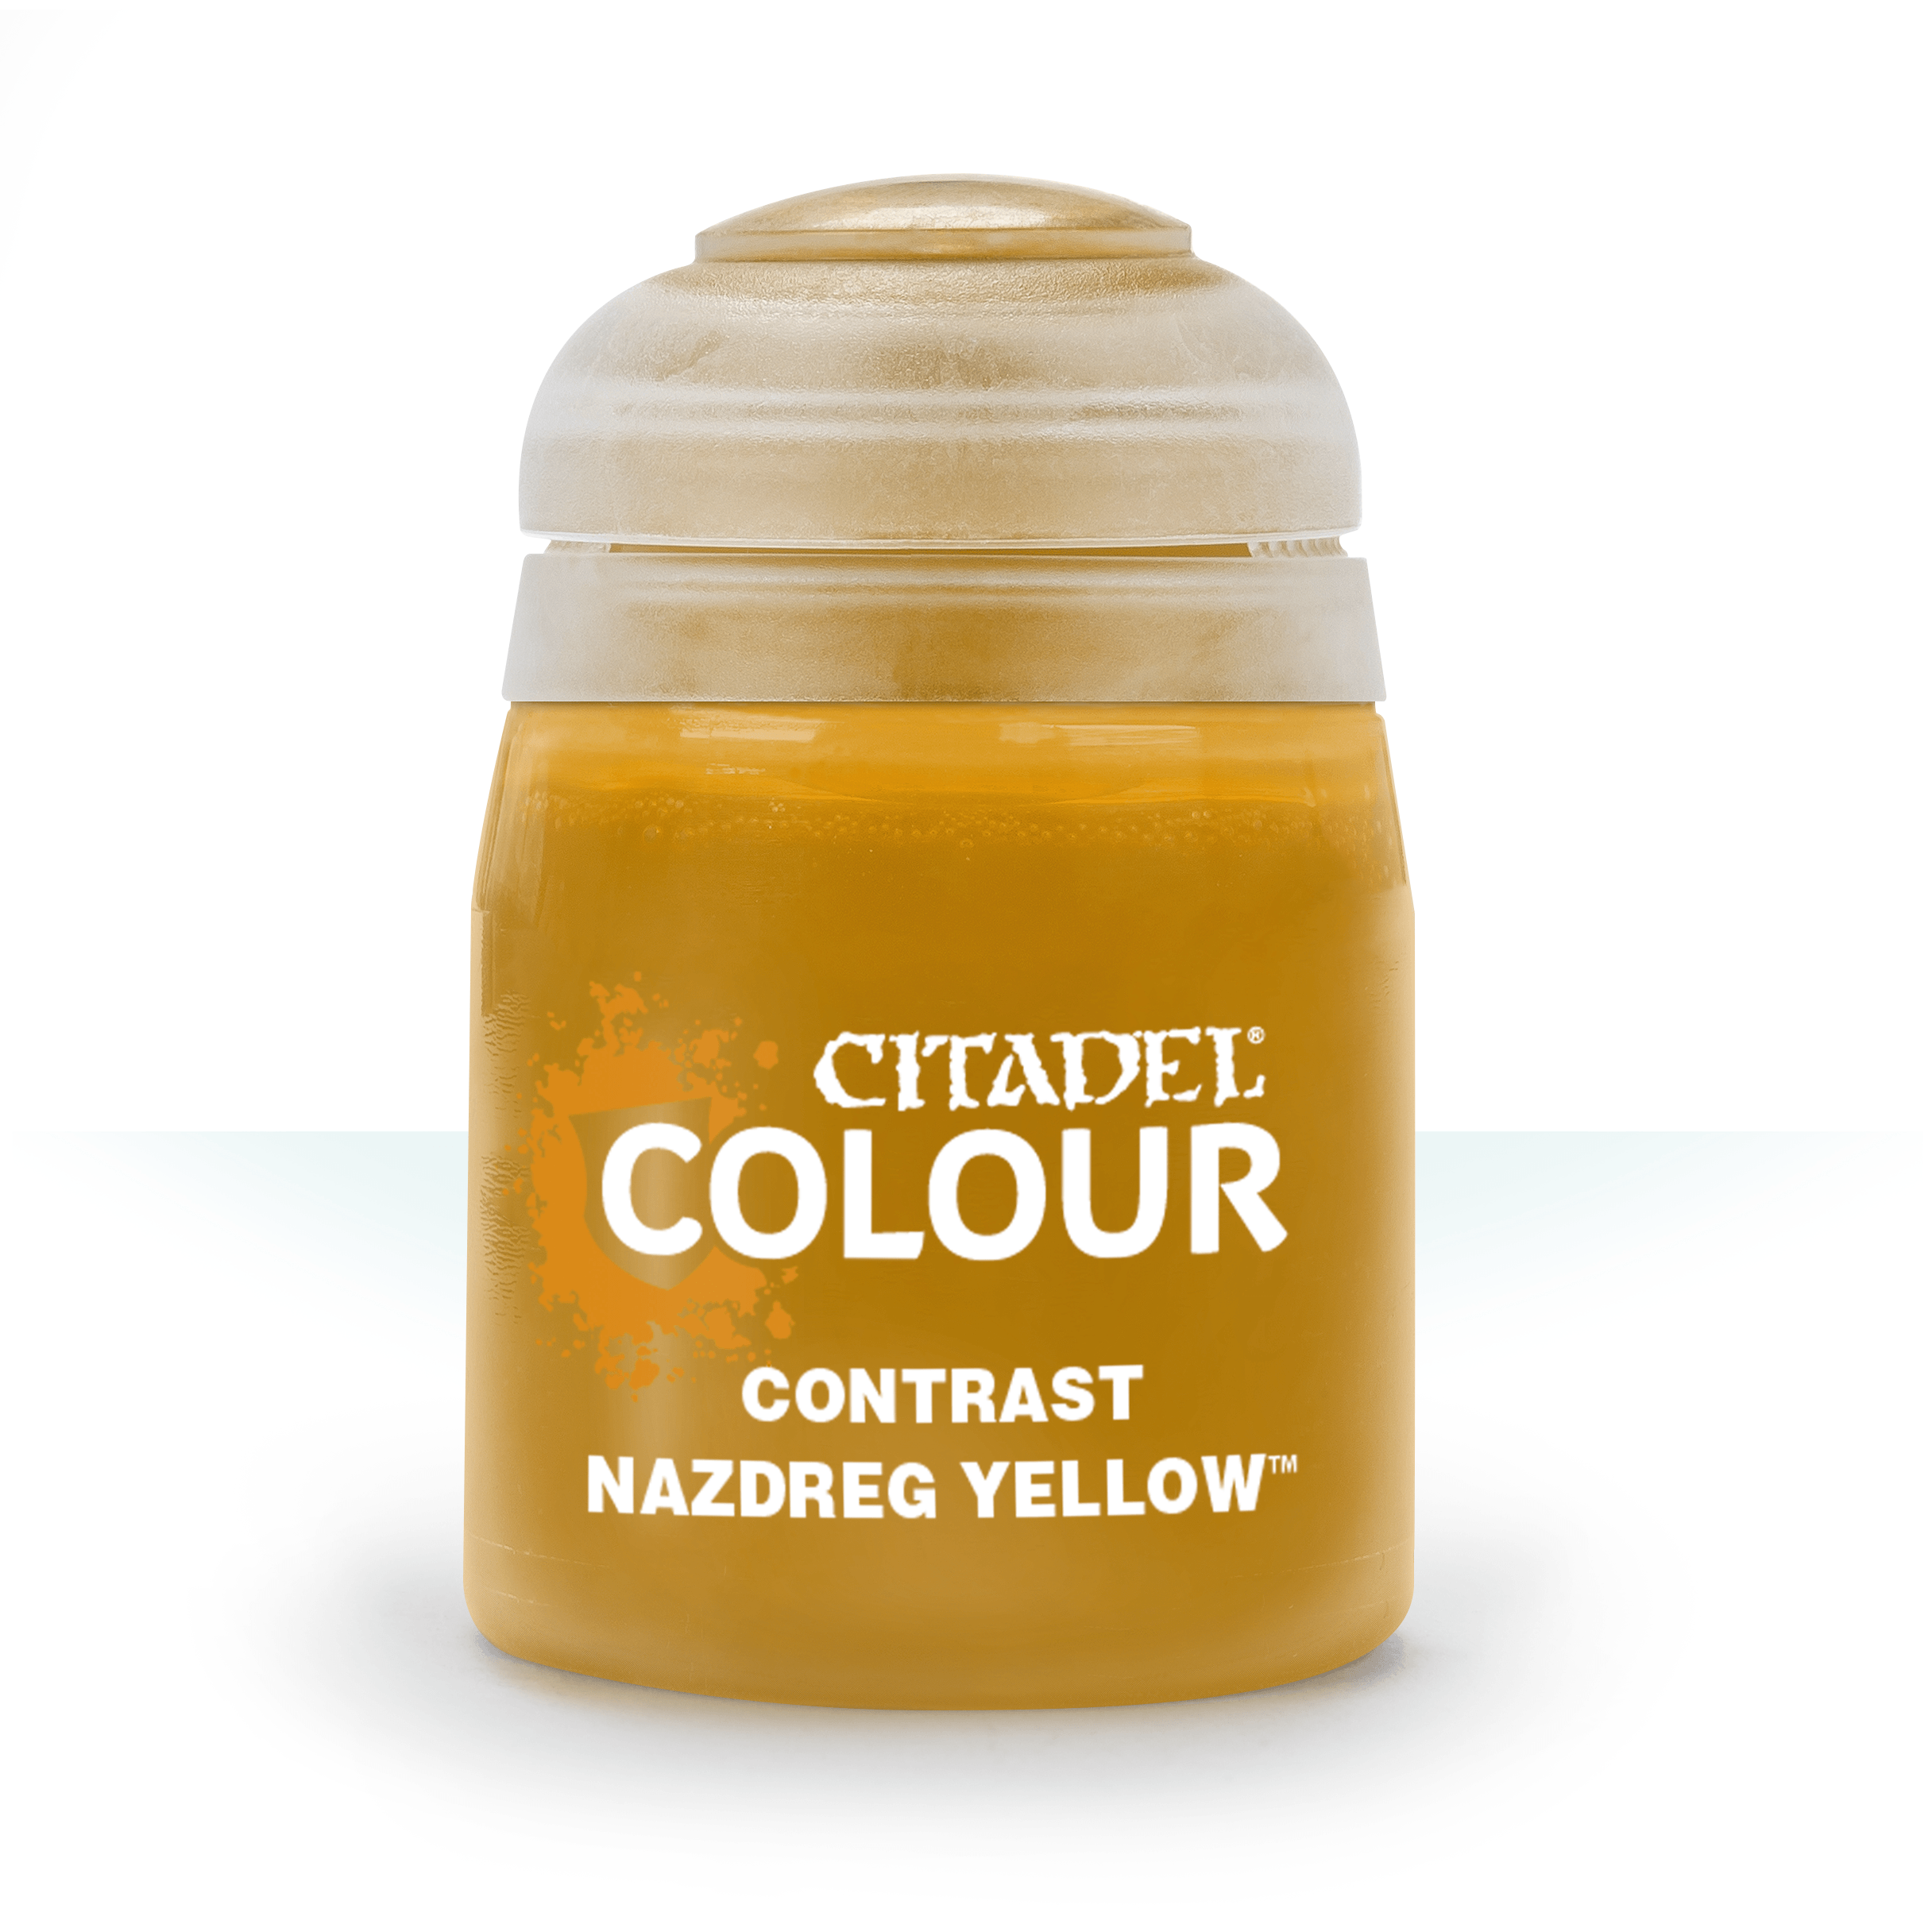 Contrast Nazdreg Yellow - Citadel Colour